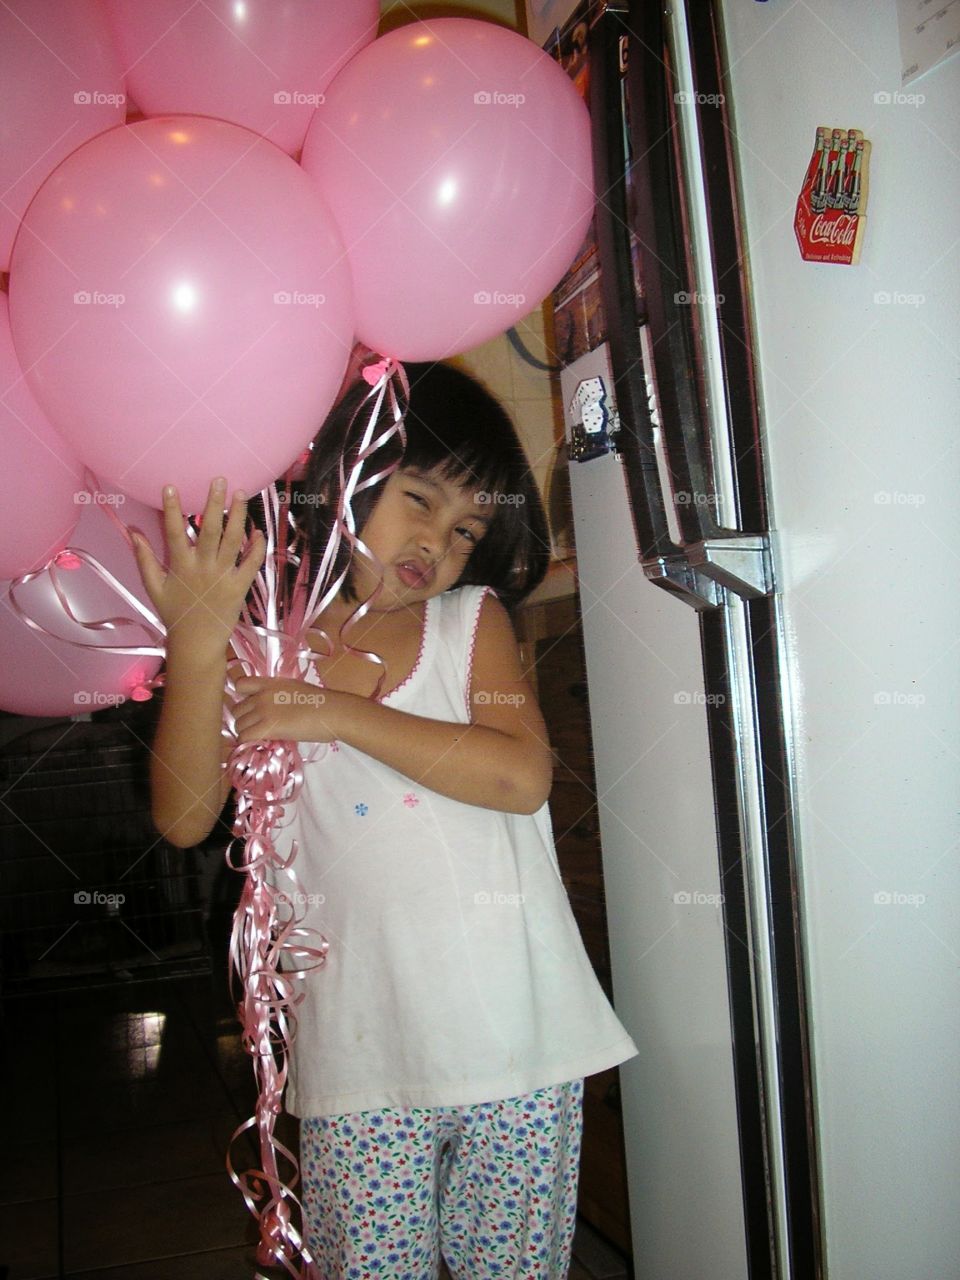 pink balloons 